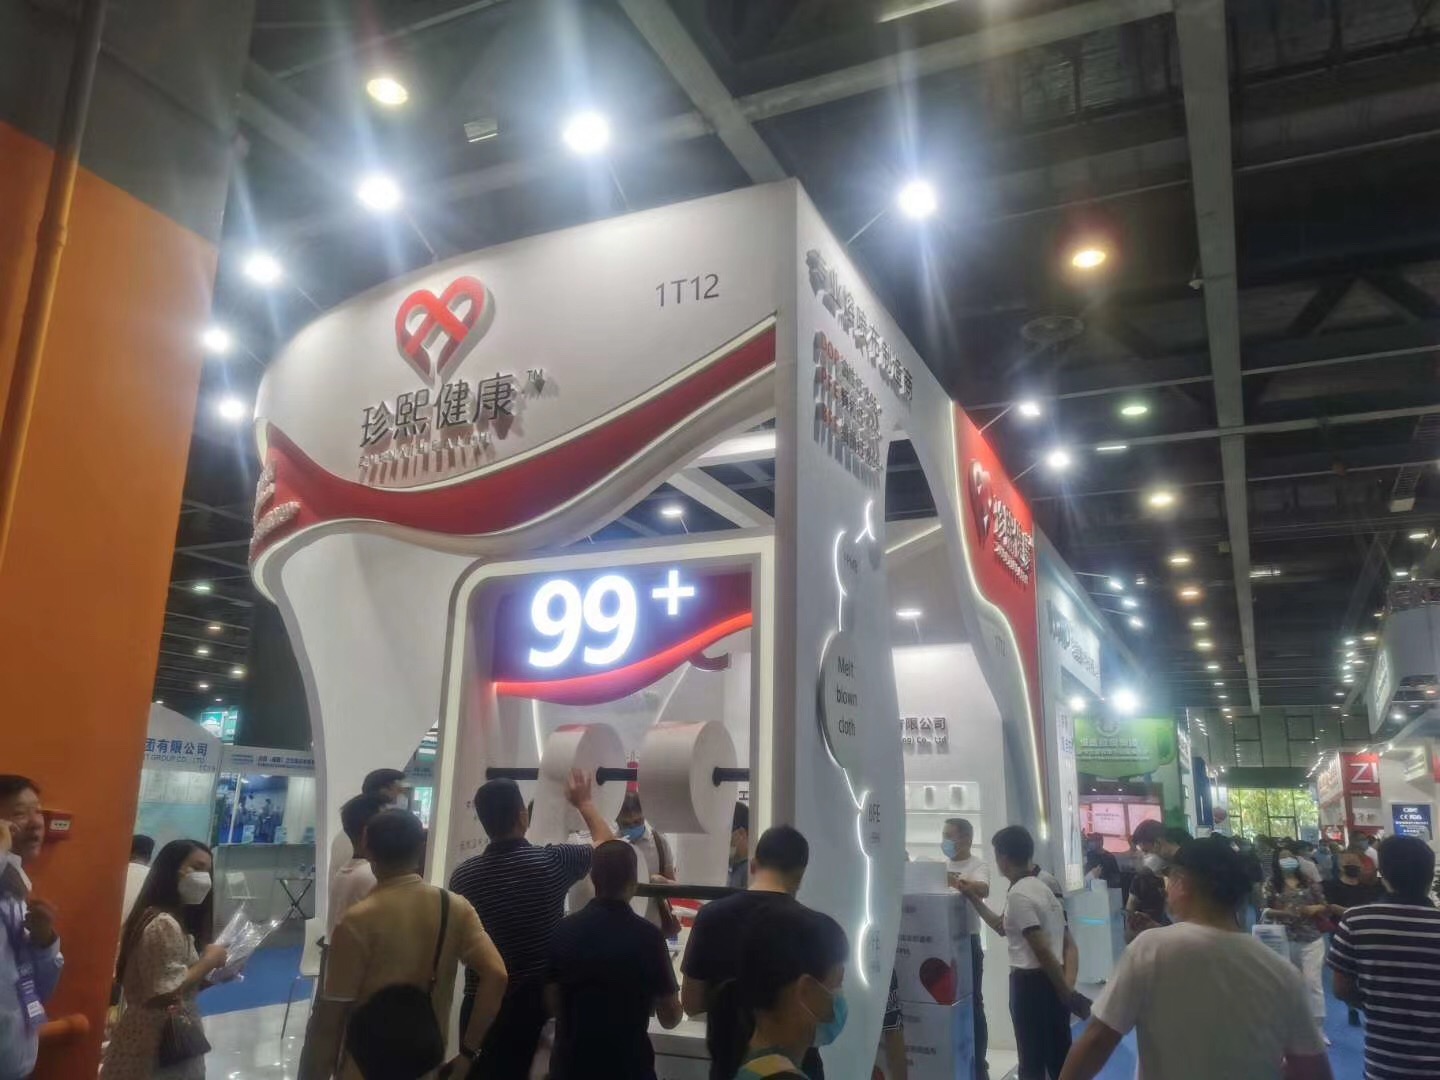 Inside Guangzhou International PPE Fair